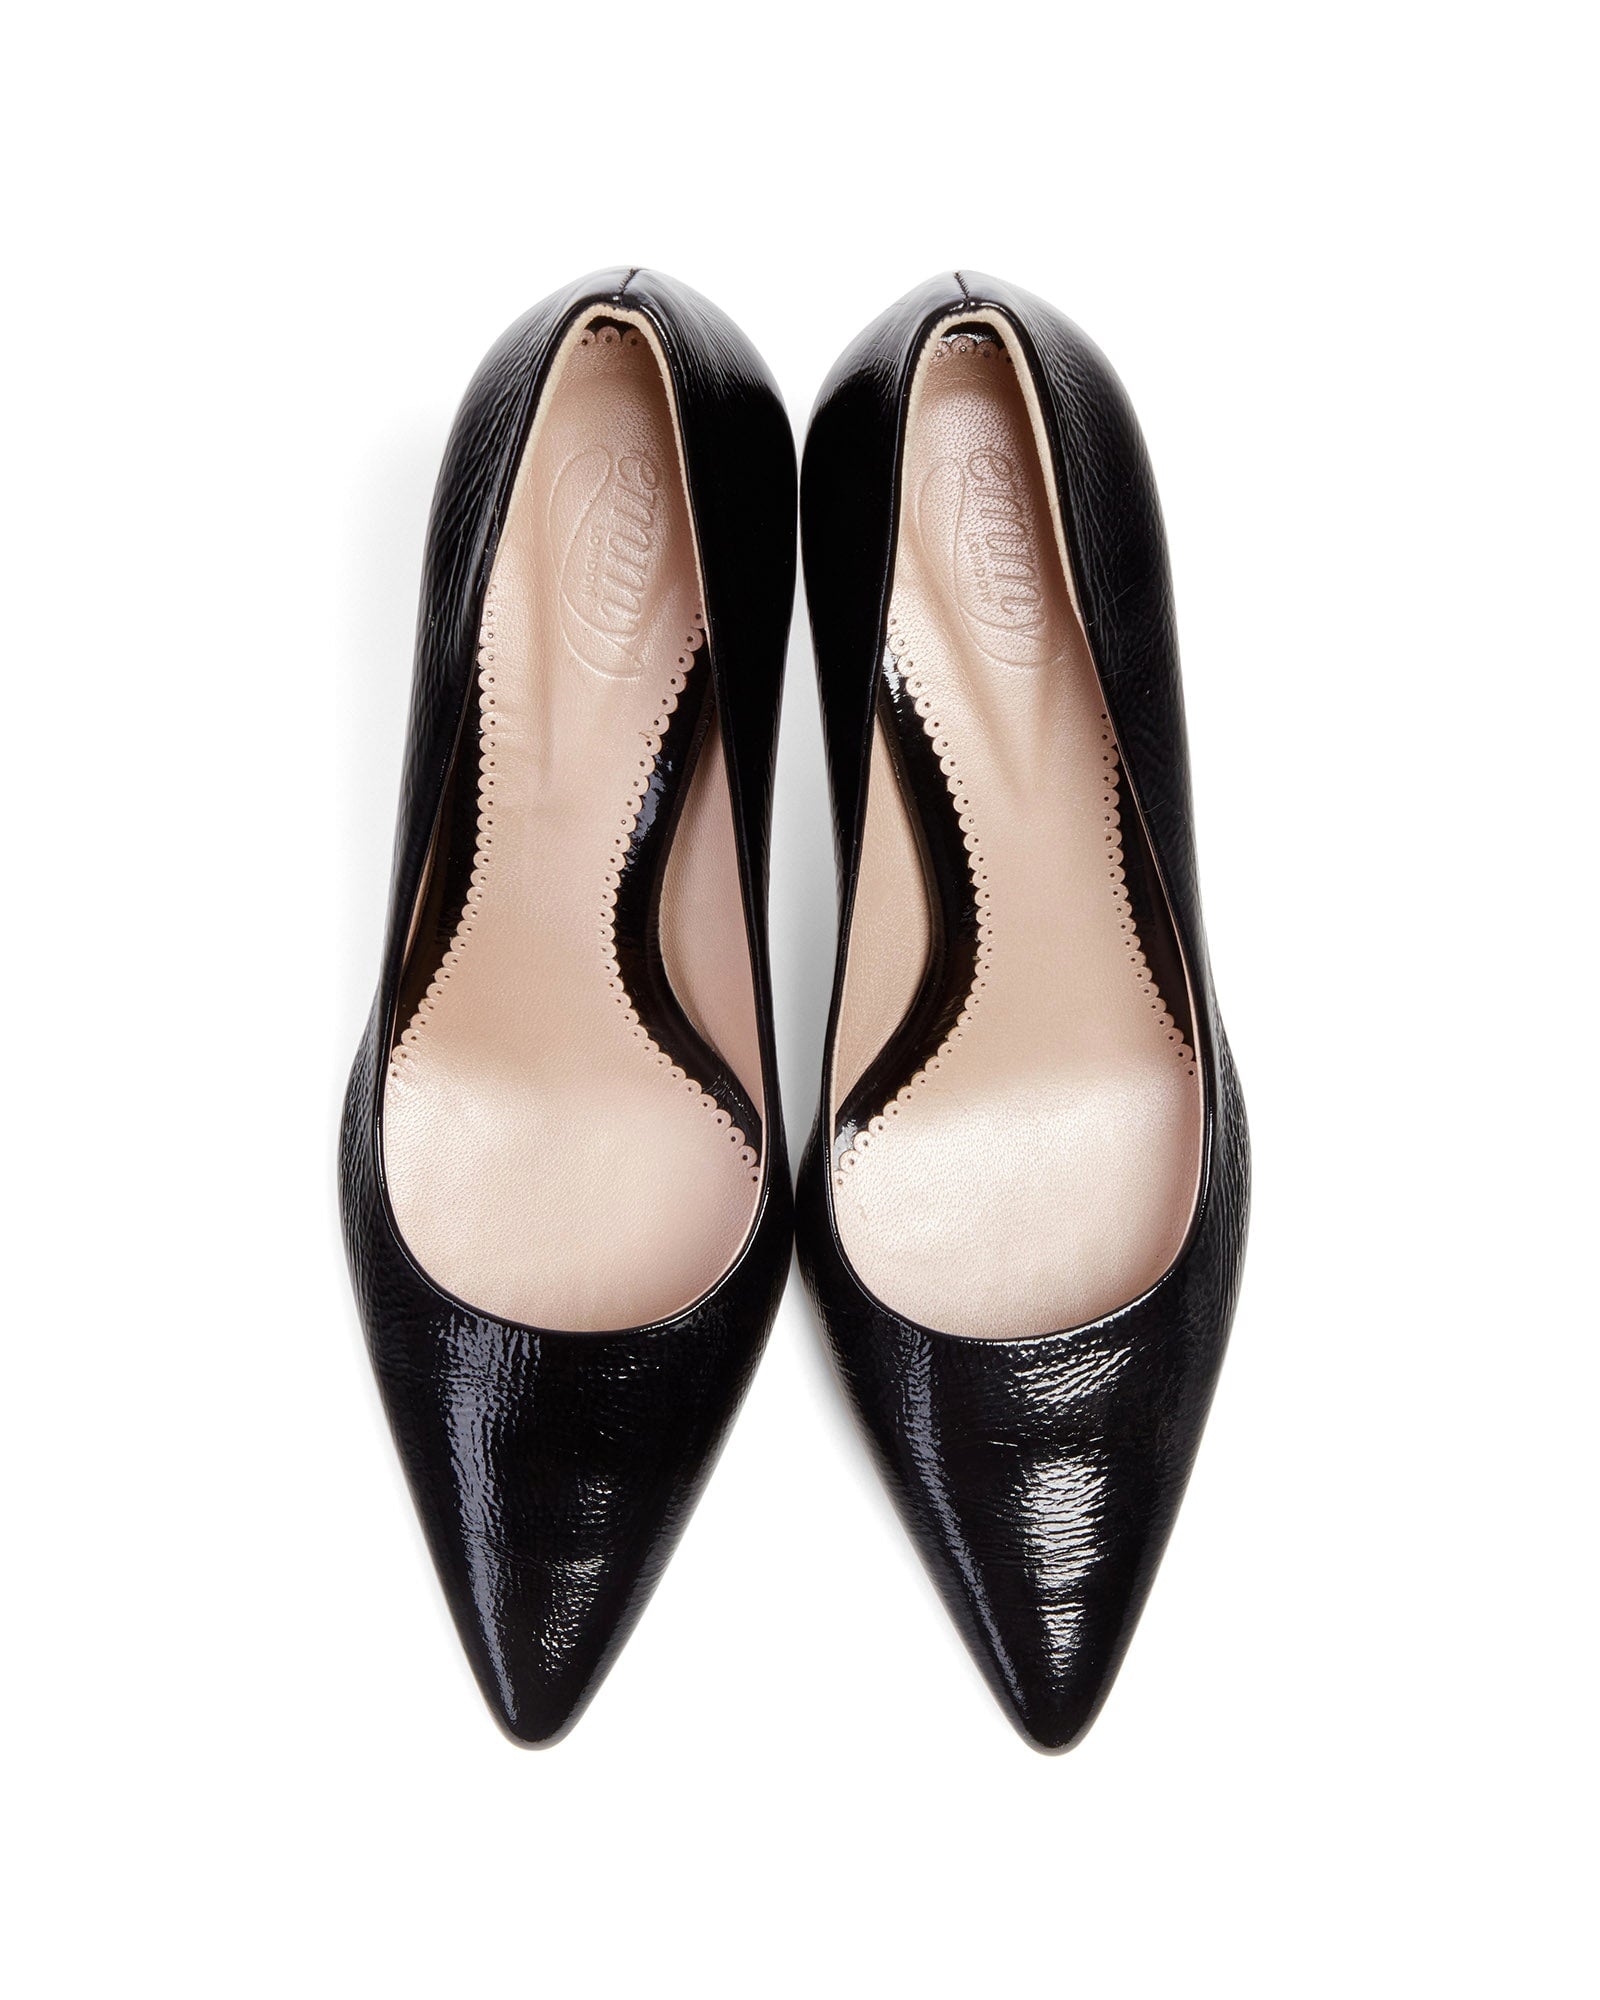 Claudia Patent Black Leather Fashion Shoe Black Leather Pointed Court Shoe  image